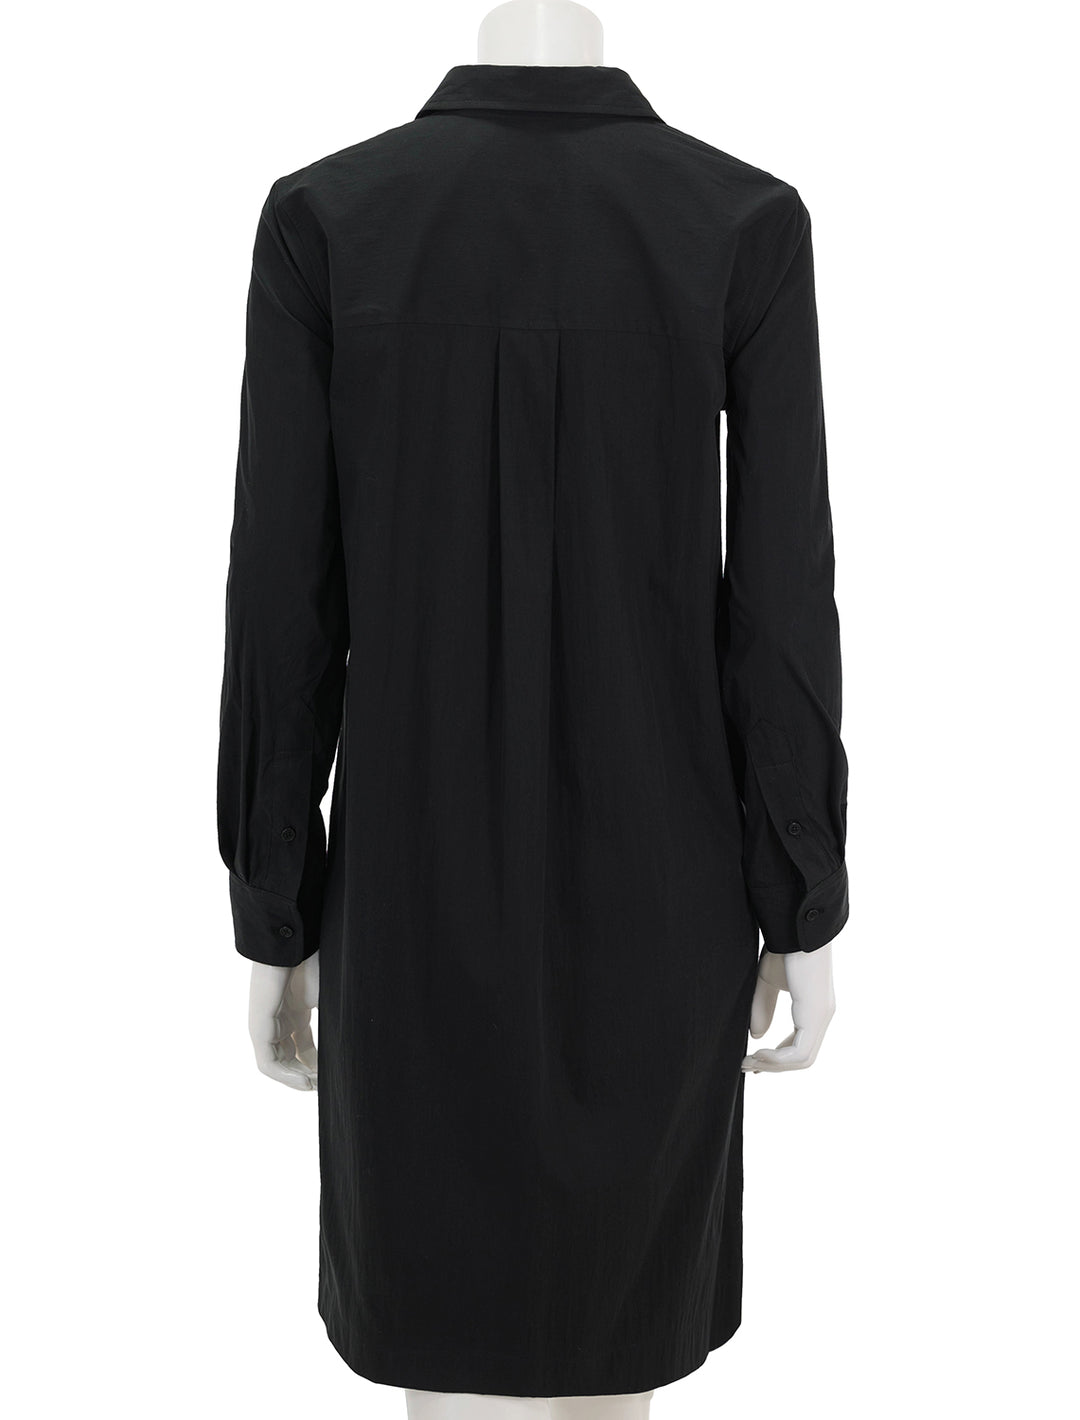 Back view of Nili Lotan's cloe dress in black.